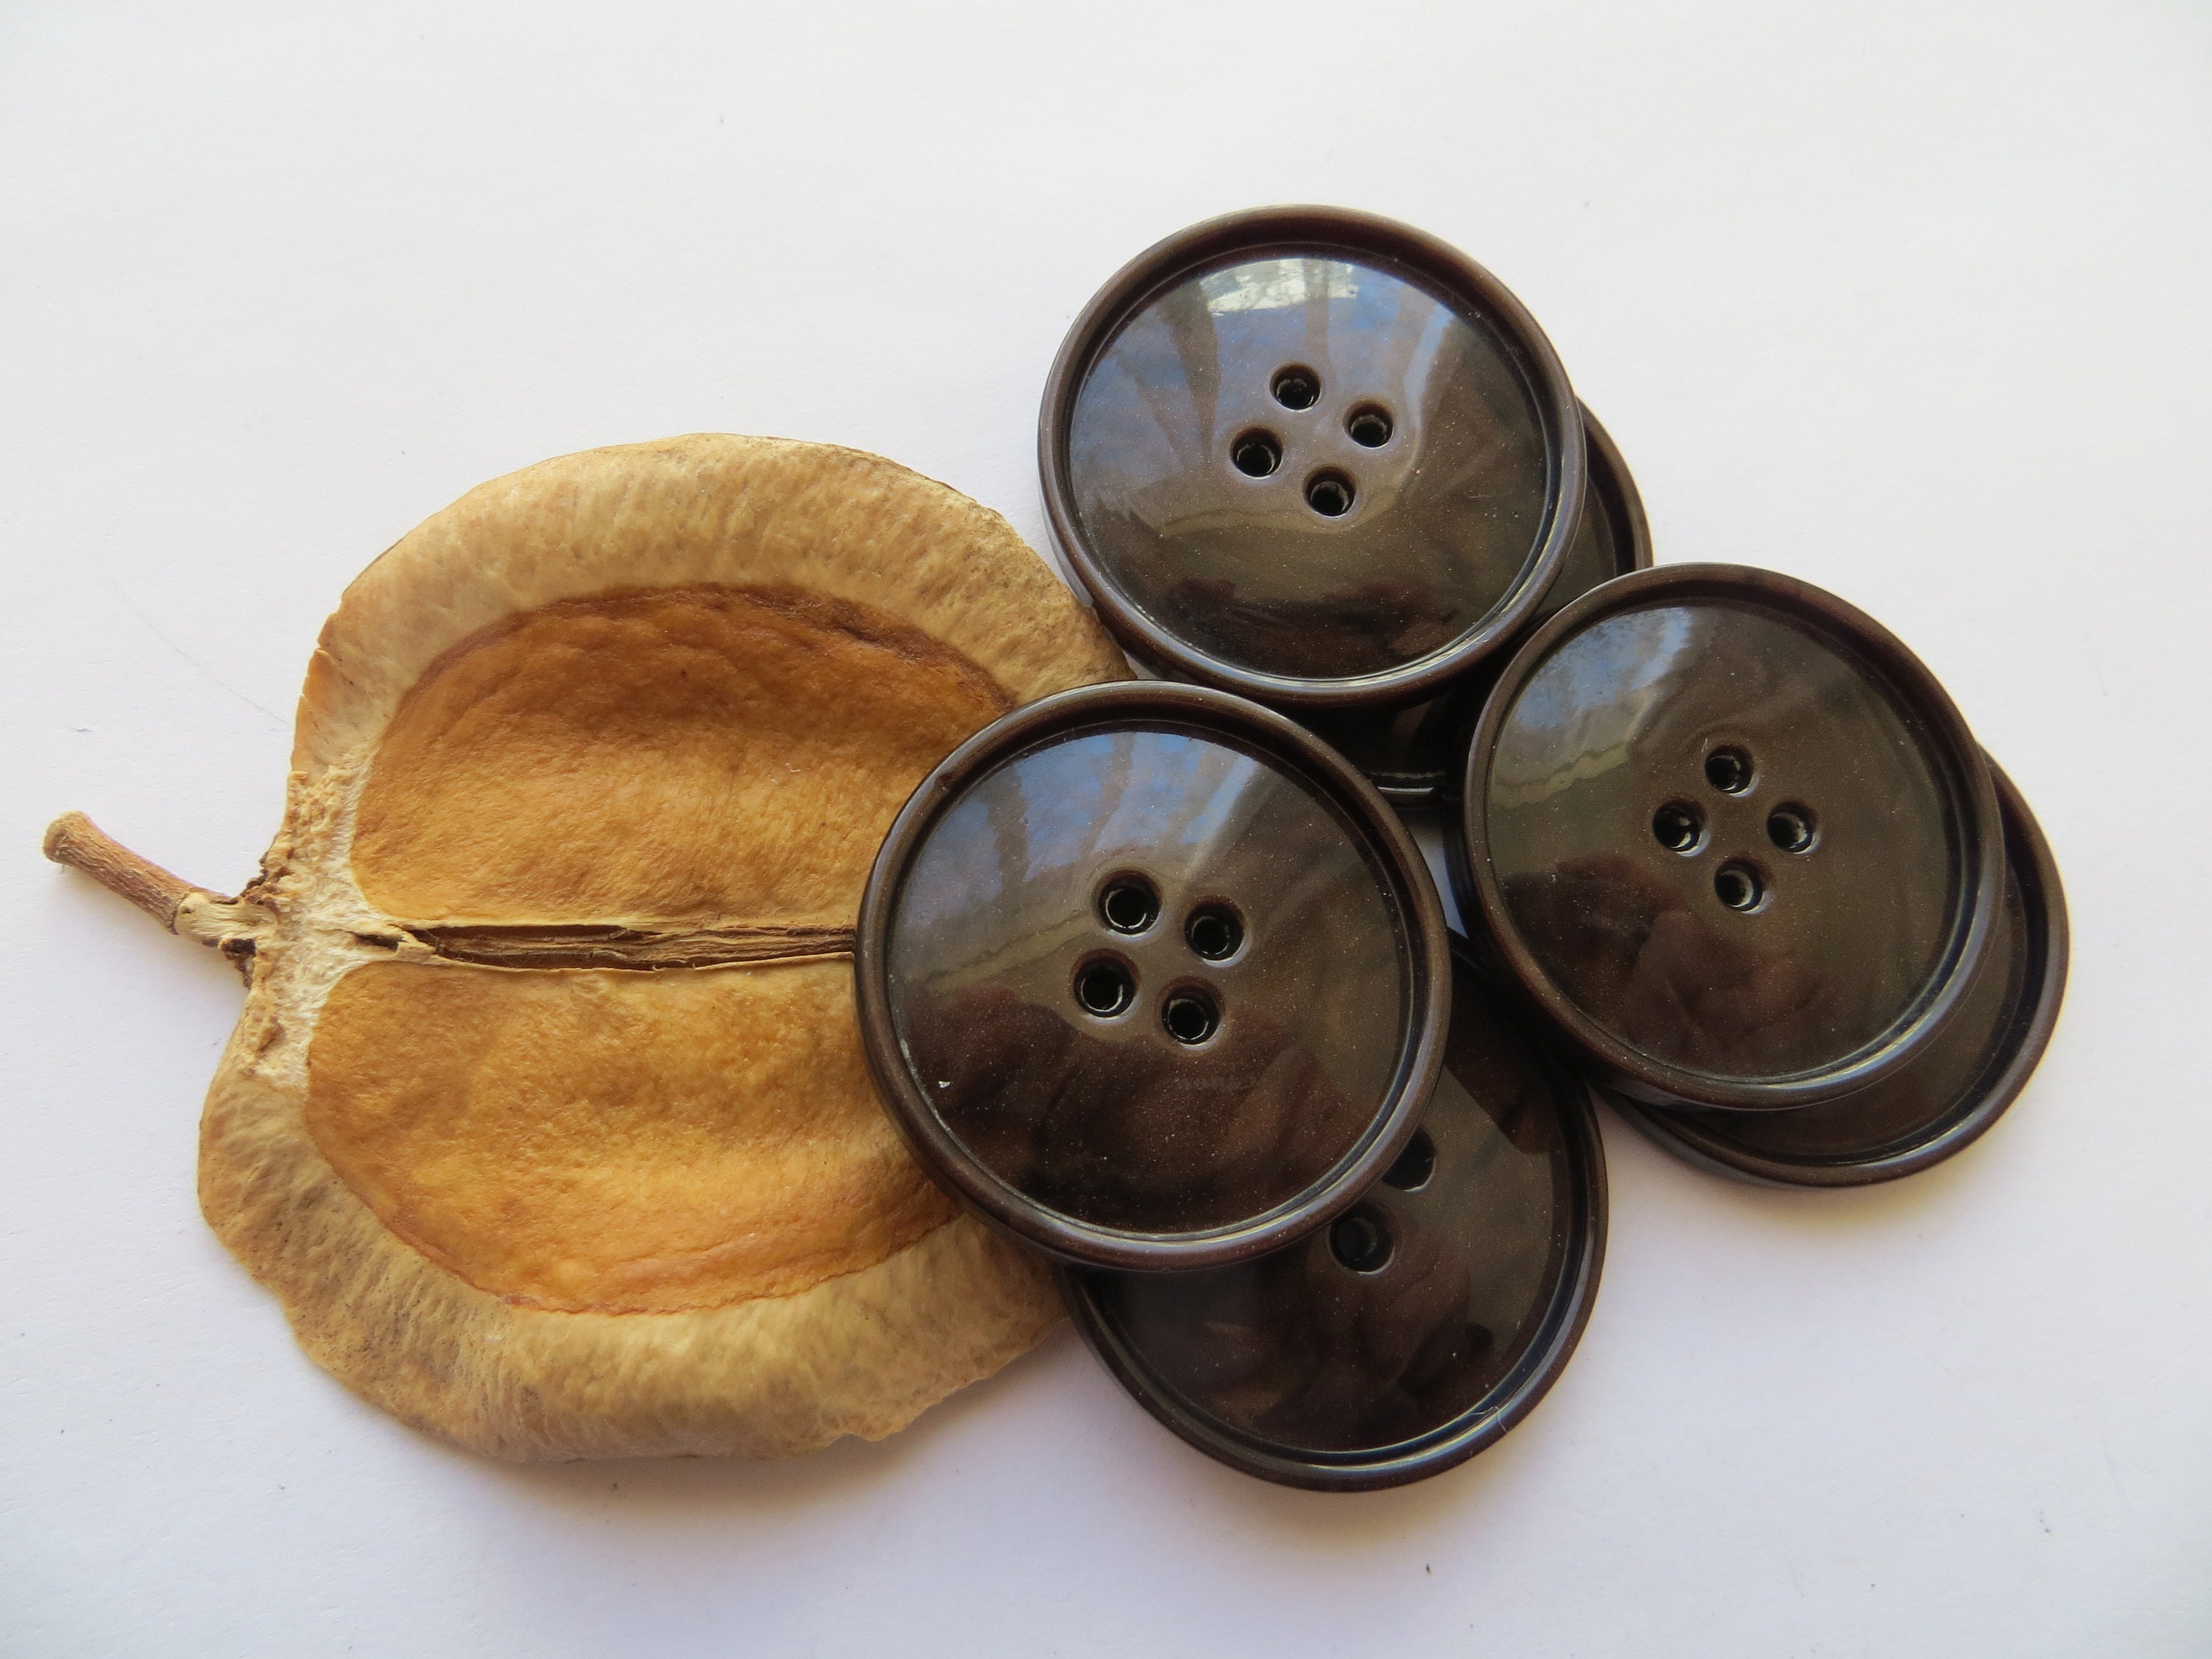  VILLCASE 10pcs Wooden Coat Buttons Flatback Buttons